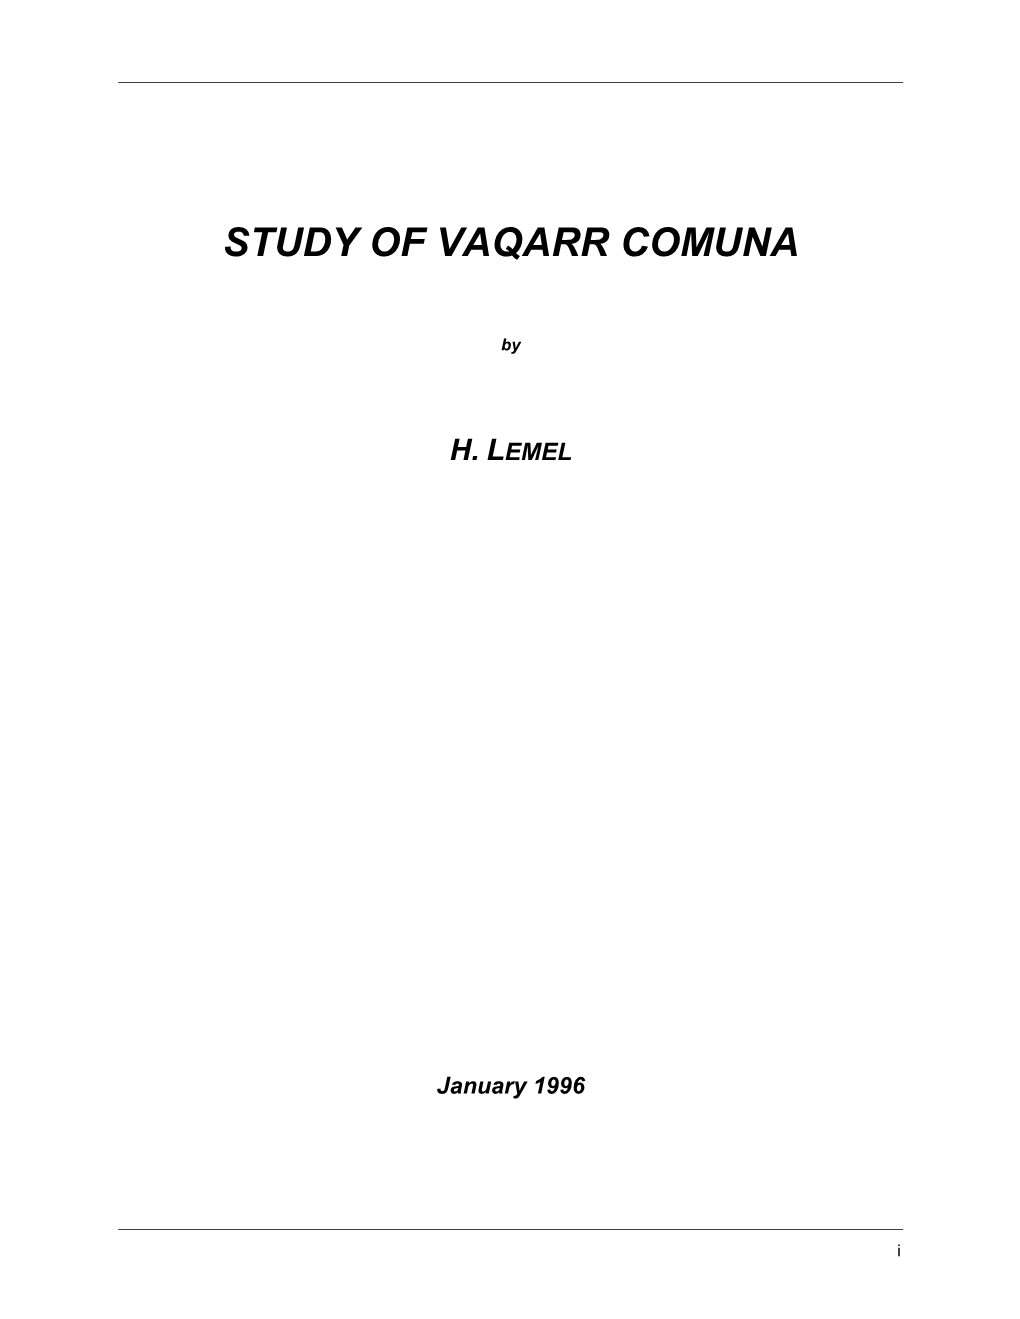 Study of Vaqarr Comuna